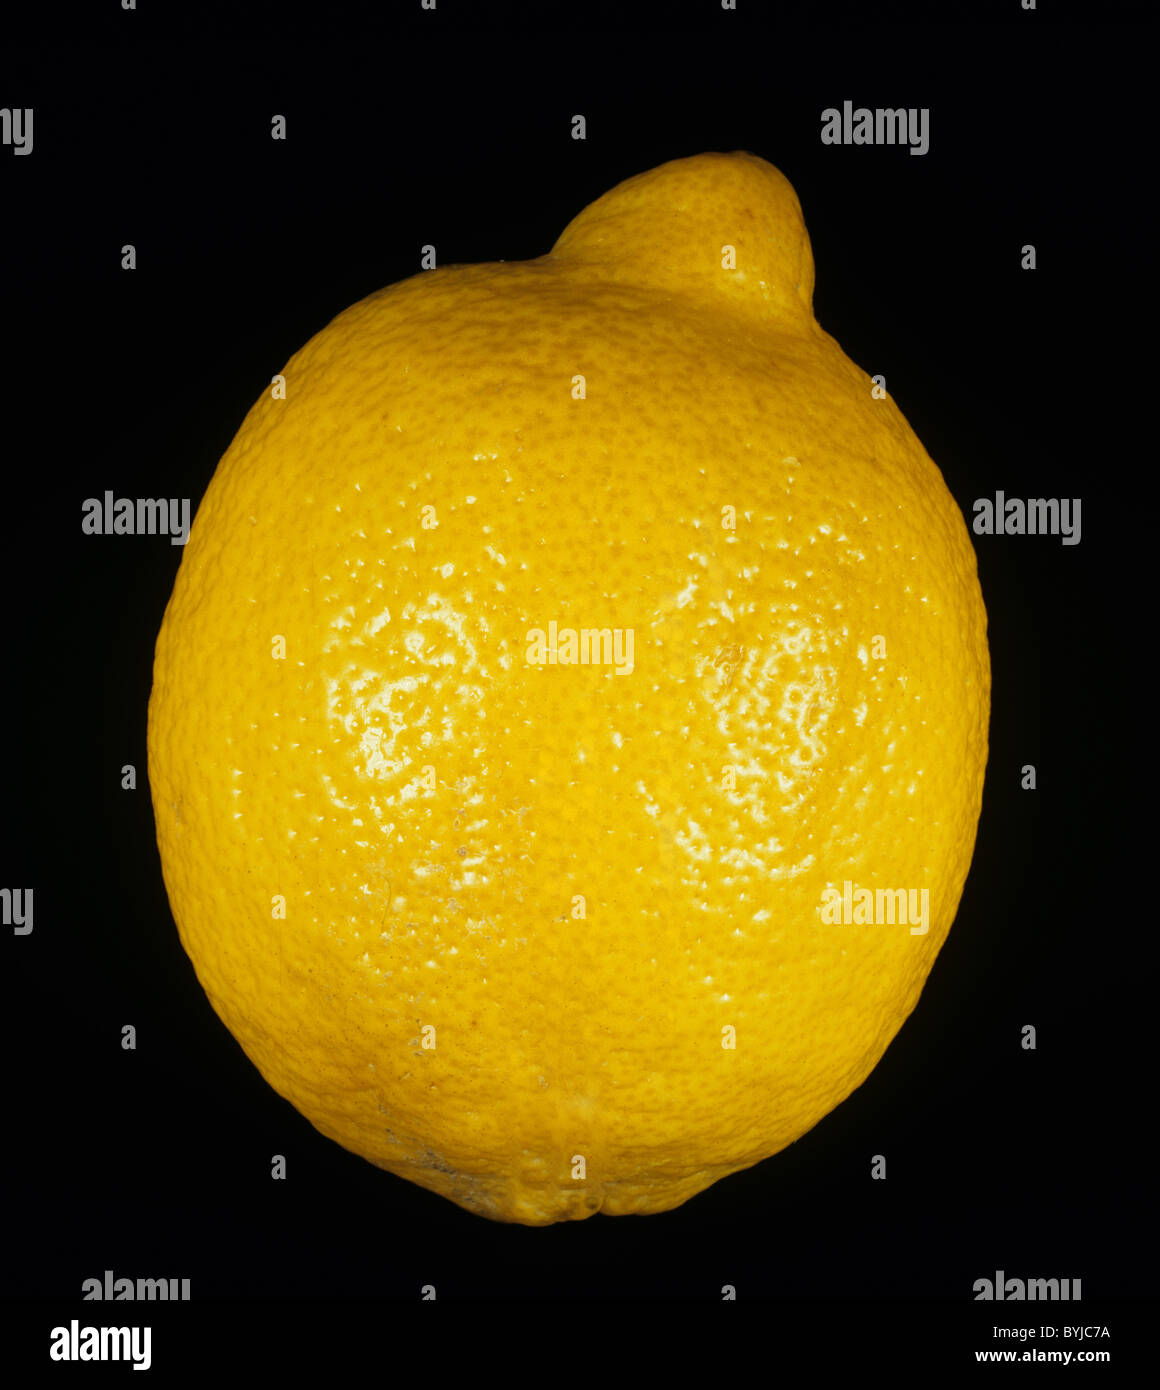 Whole citrus fruit lemon variety Fino Stock Photo